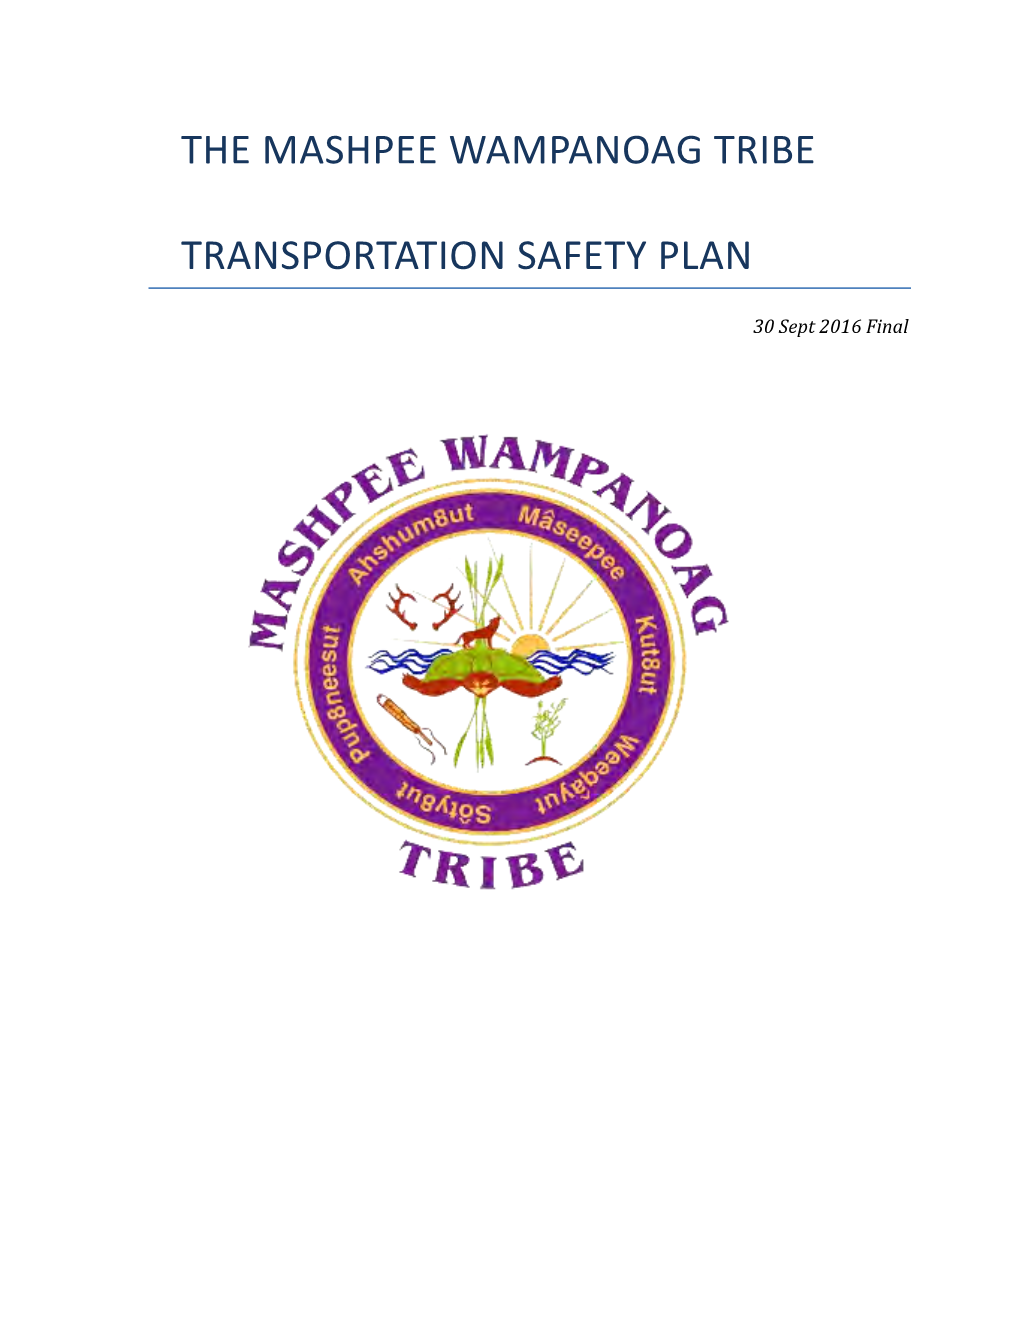 The Mashpee Wampanoag Tribe Transportation Safety Plan